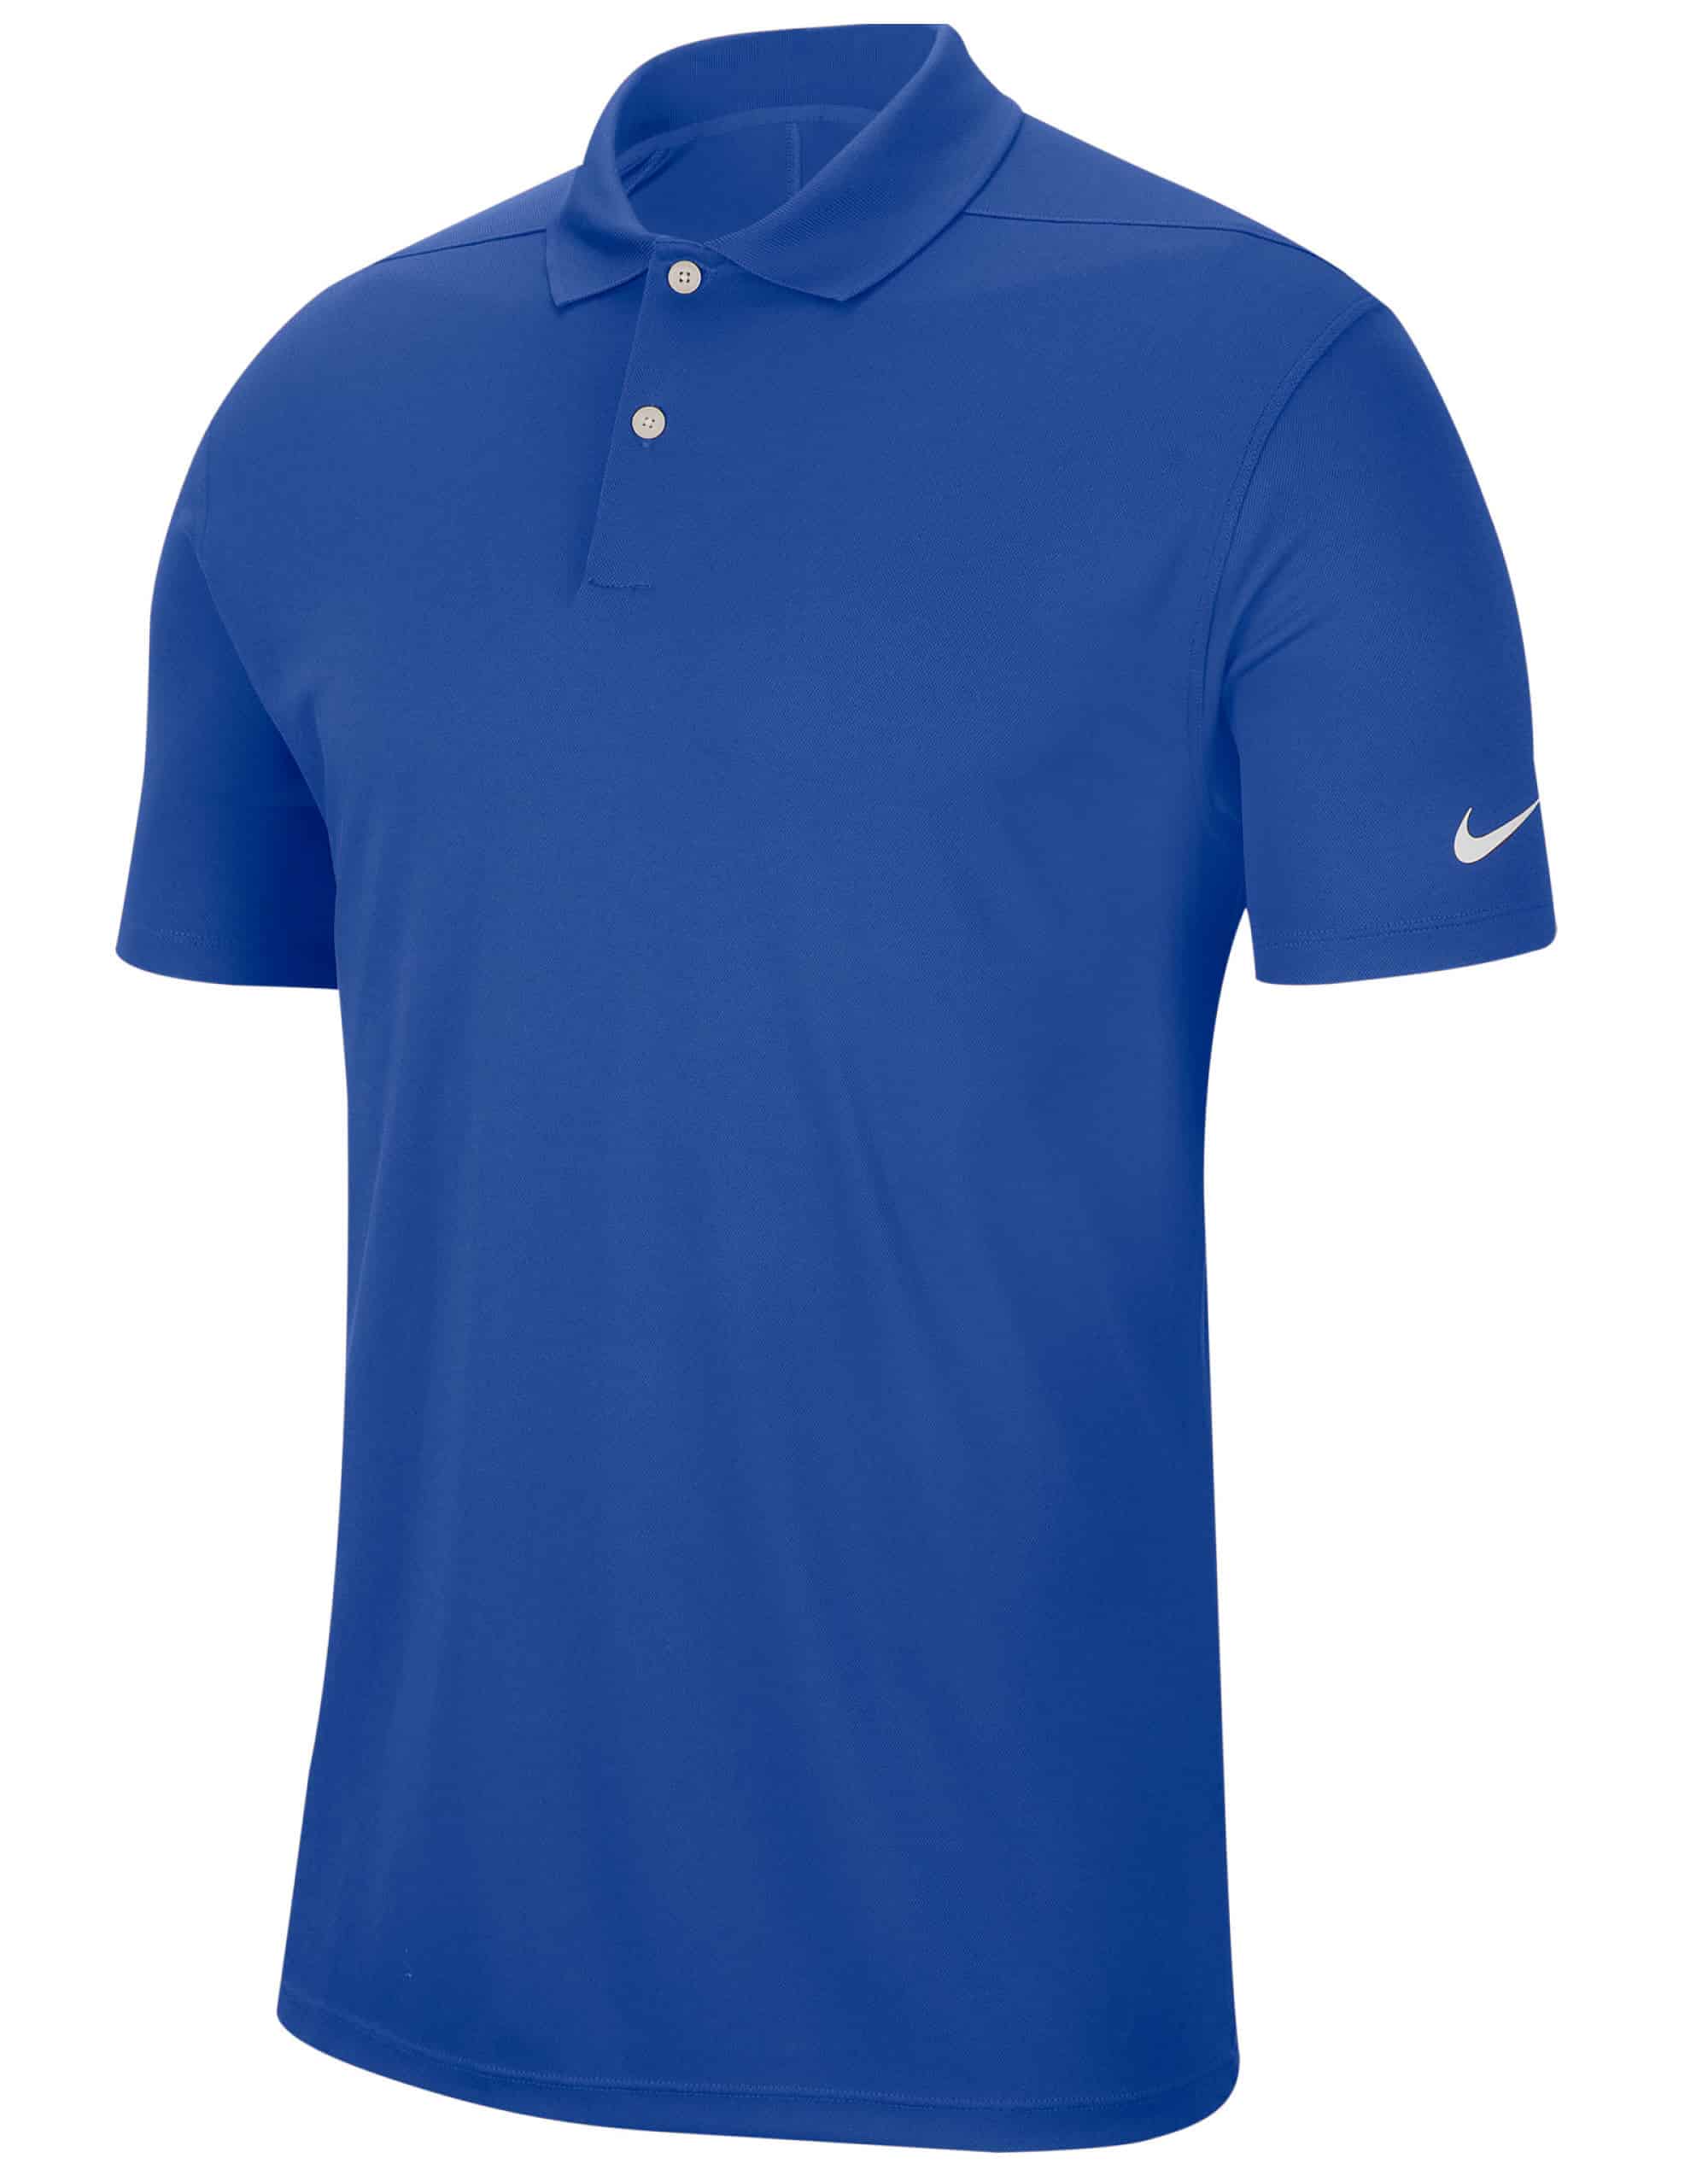 Golf Logo Shirts Polo - Nike Golf Shirts - Printed or Embroidery